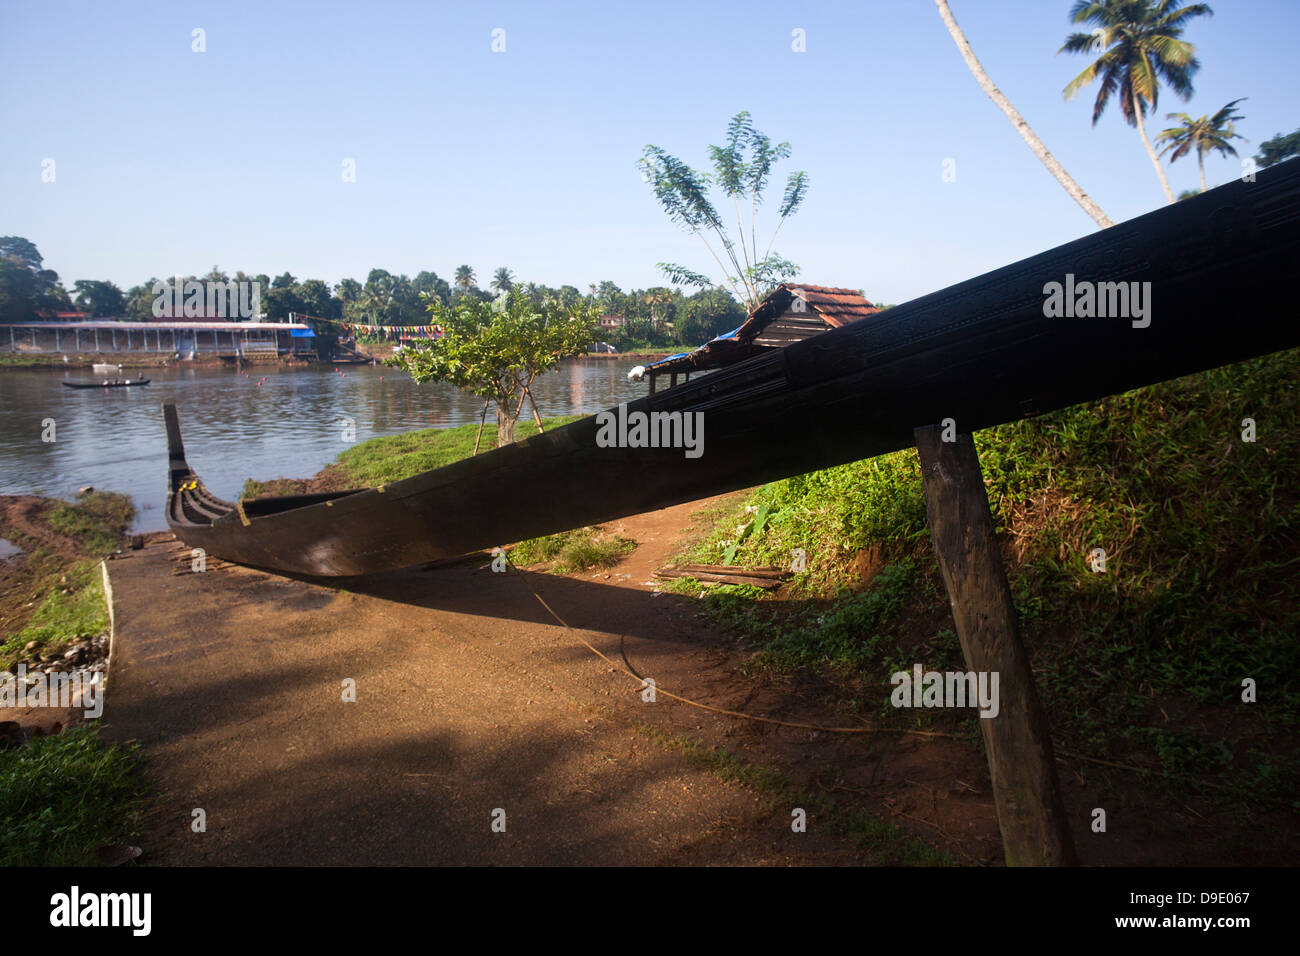 Snake boat at the riverside, Aranmula, Kerala, India Stock Photo